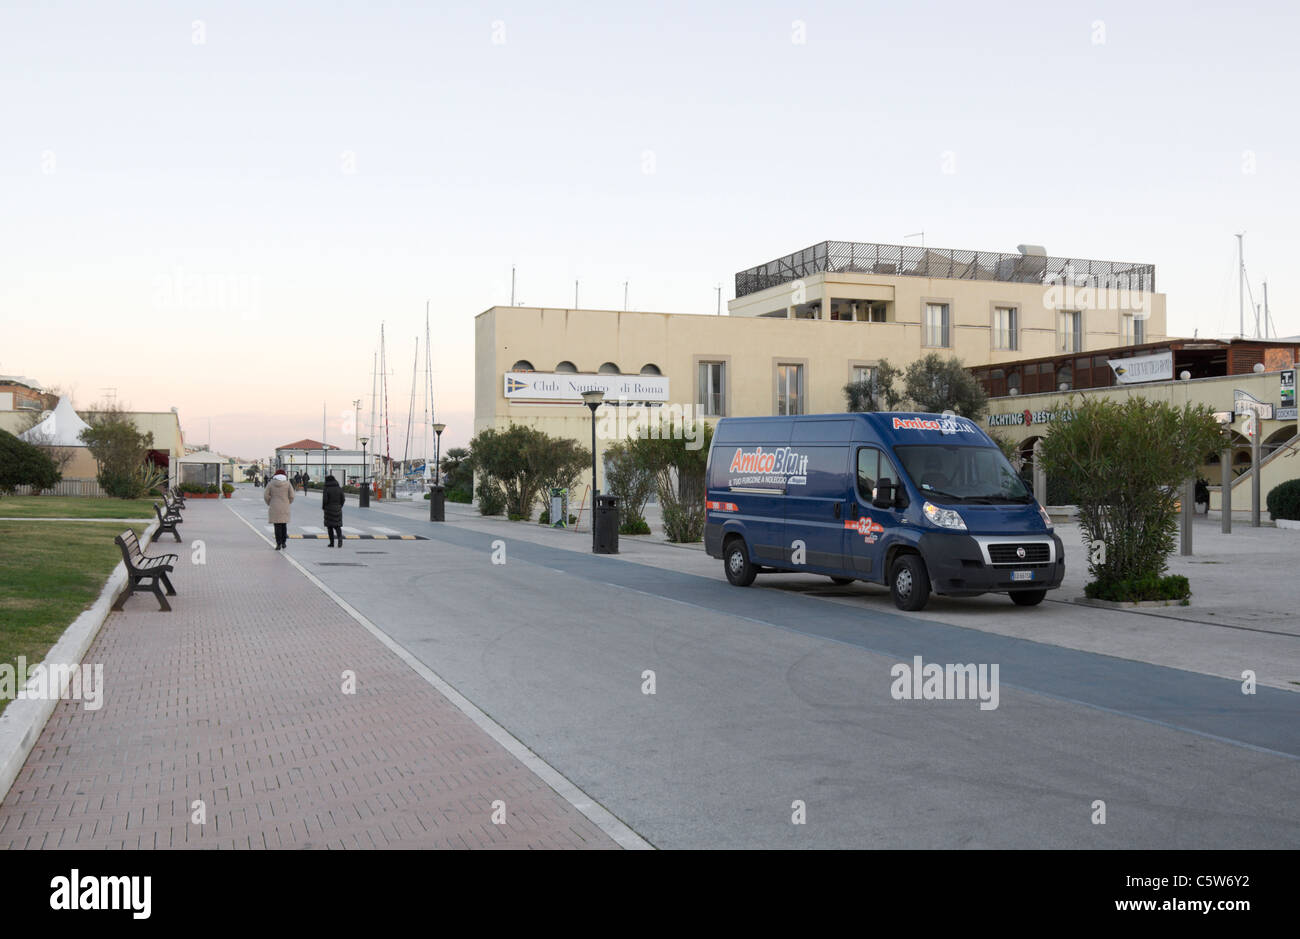 Ostia harbour, Amico Blu rental company delivery van, winter season. Stock Photo